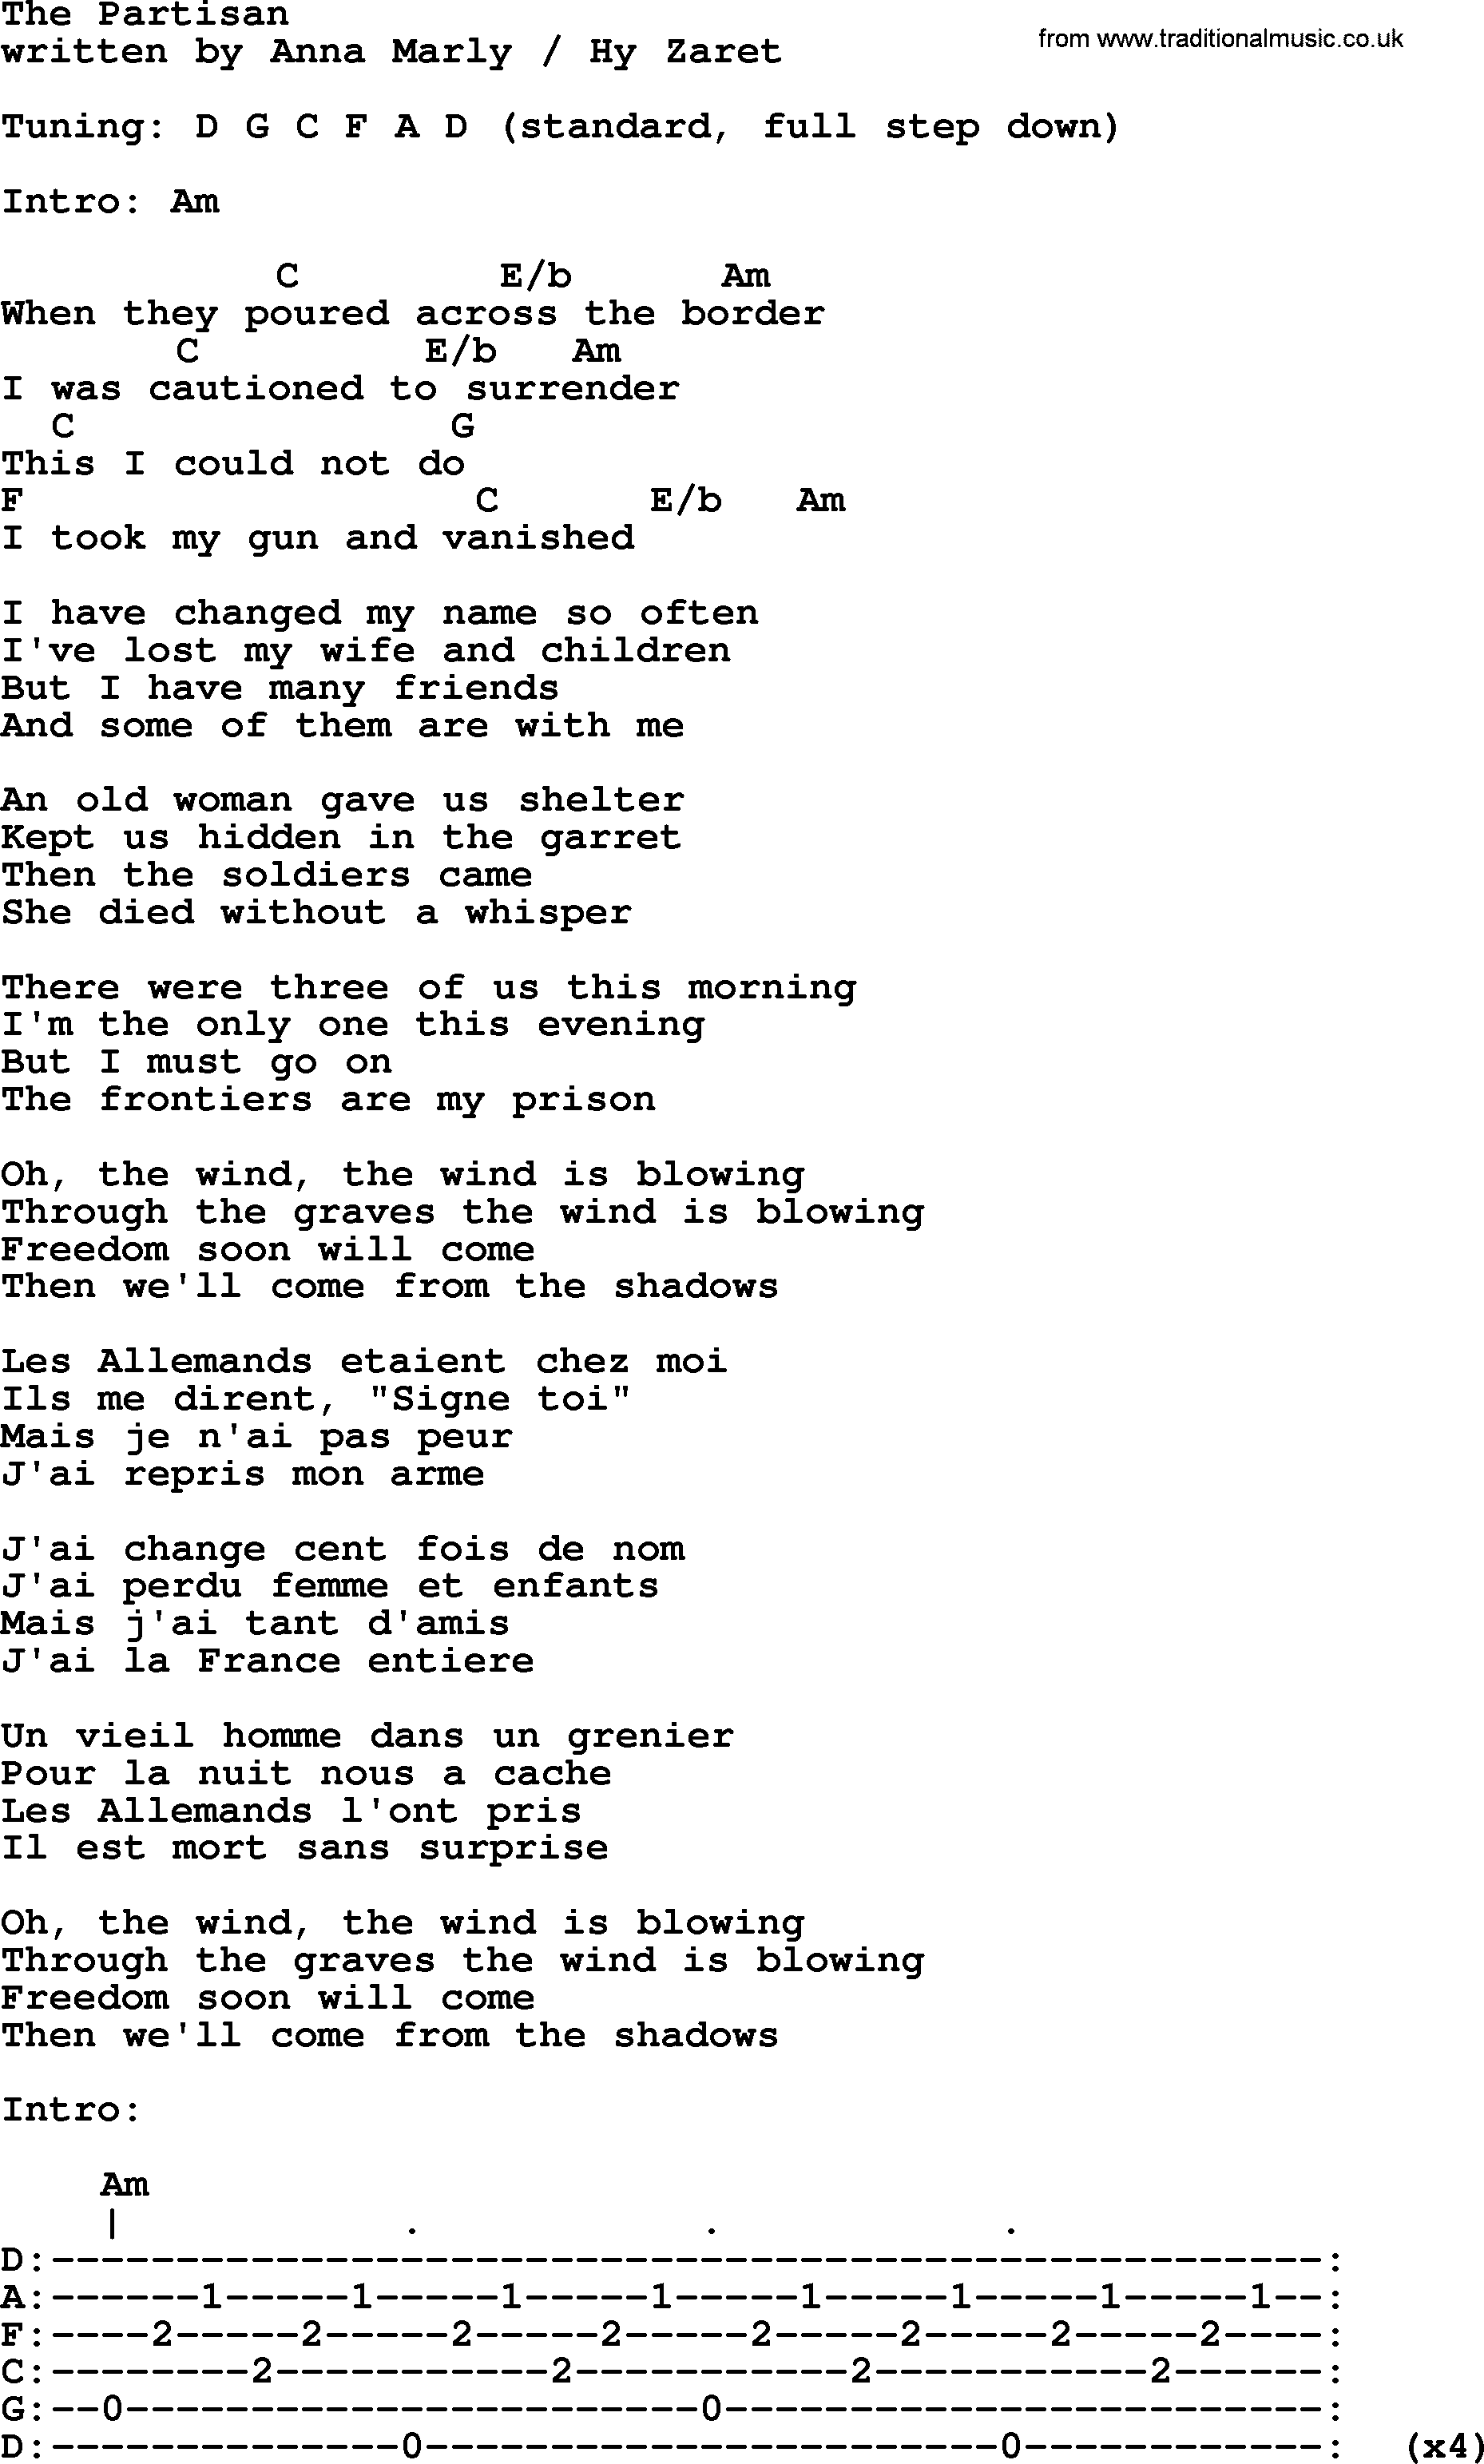 Leonard Cohen song The Partisan, lyrics and chords